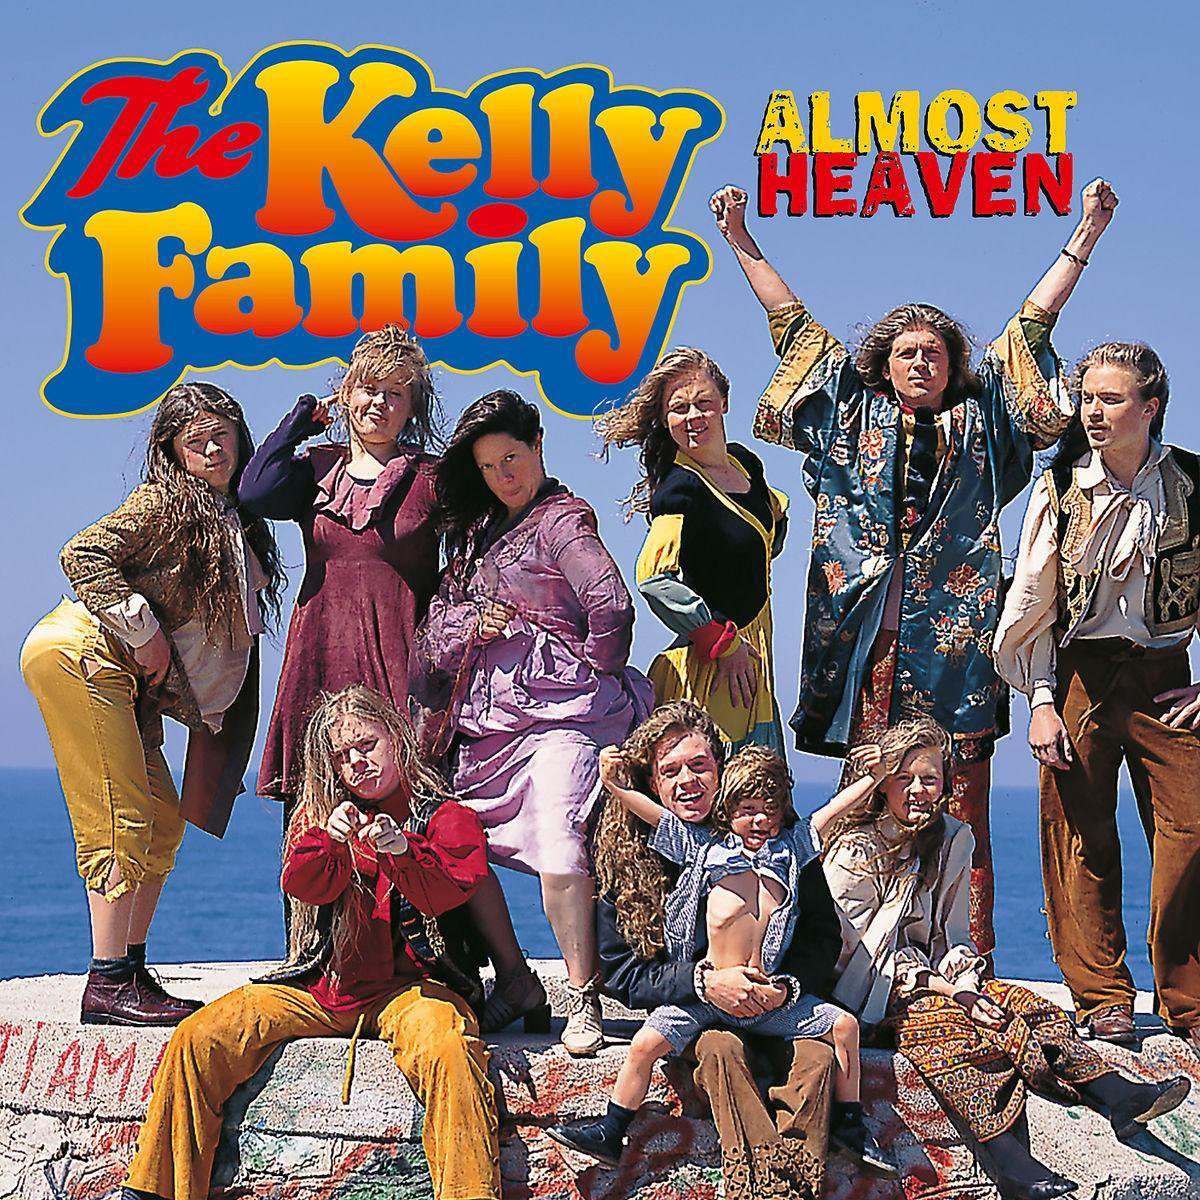 Kelly Family - Almost Heaven - The Kelly Family